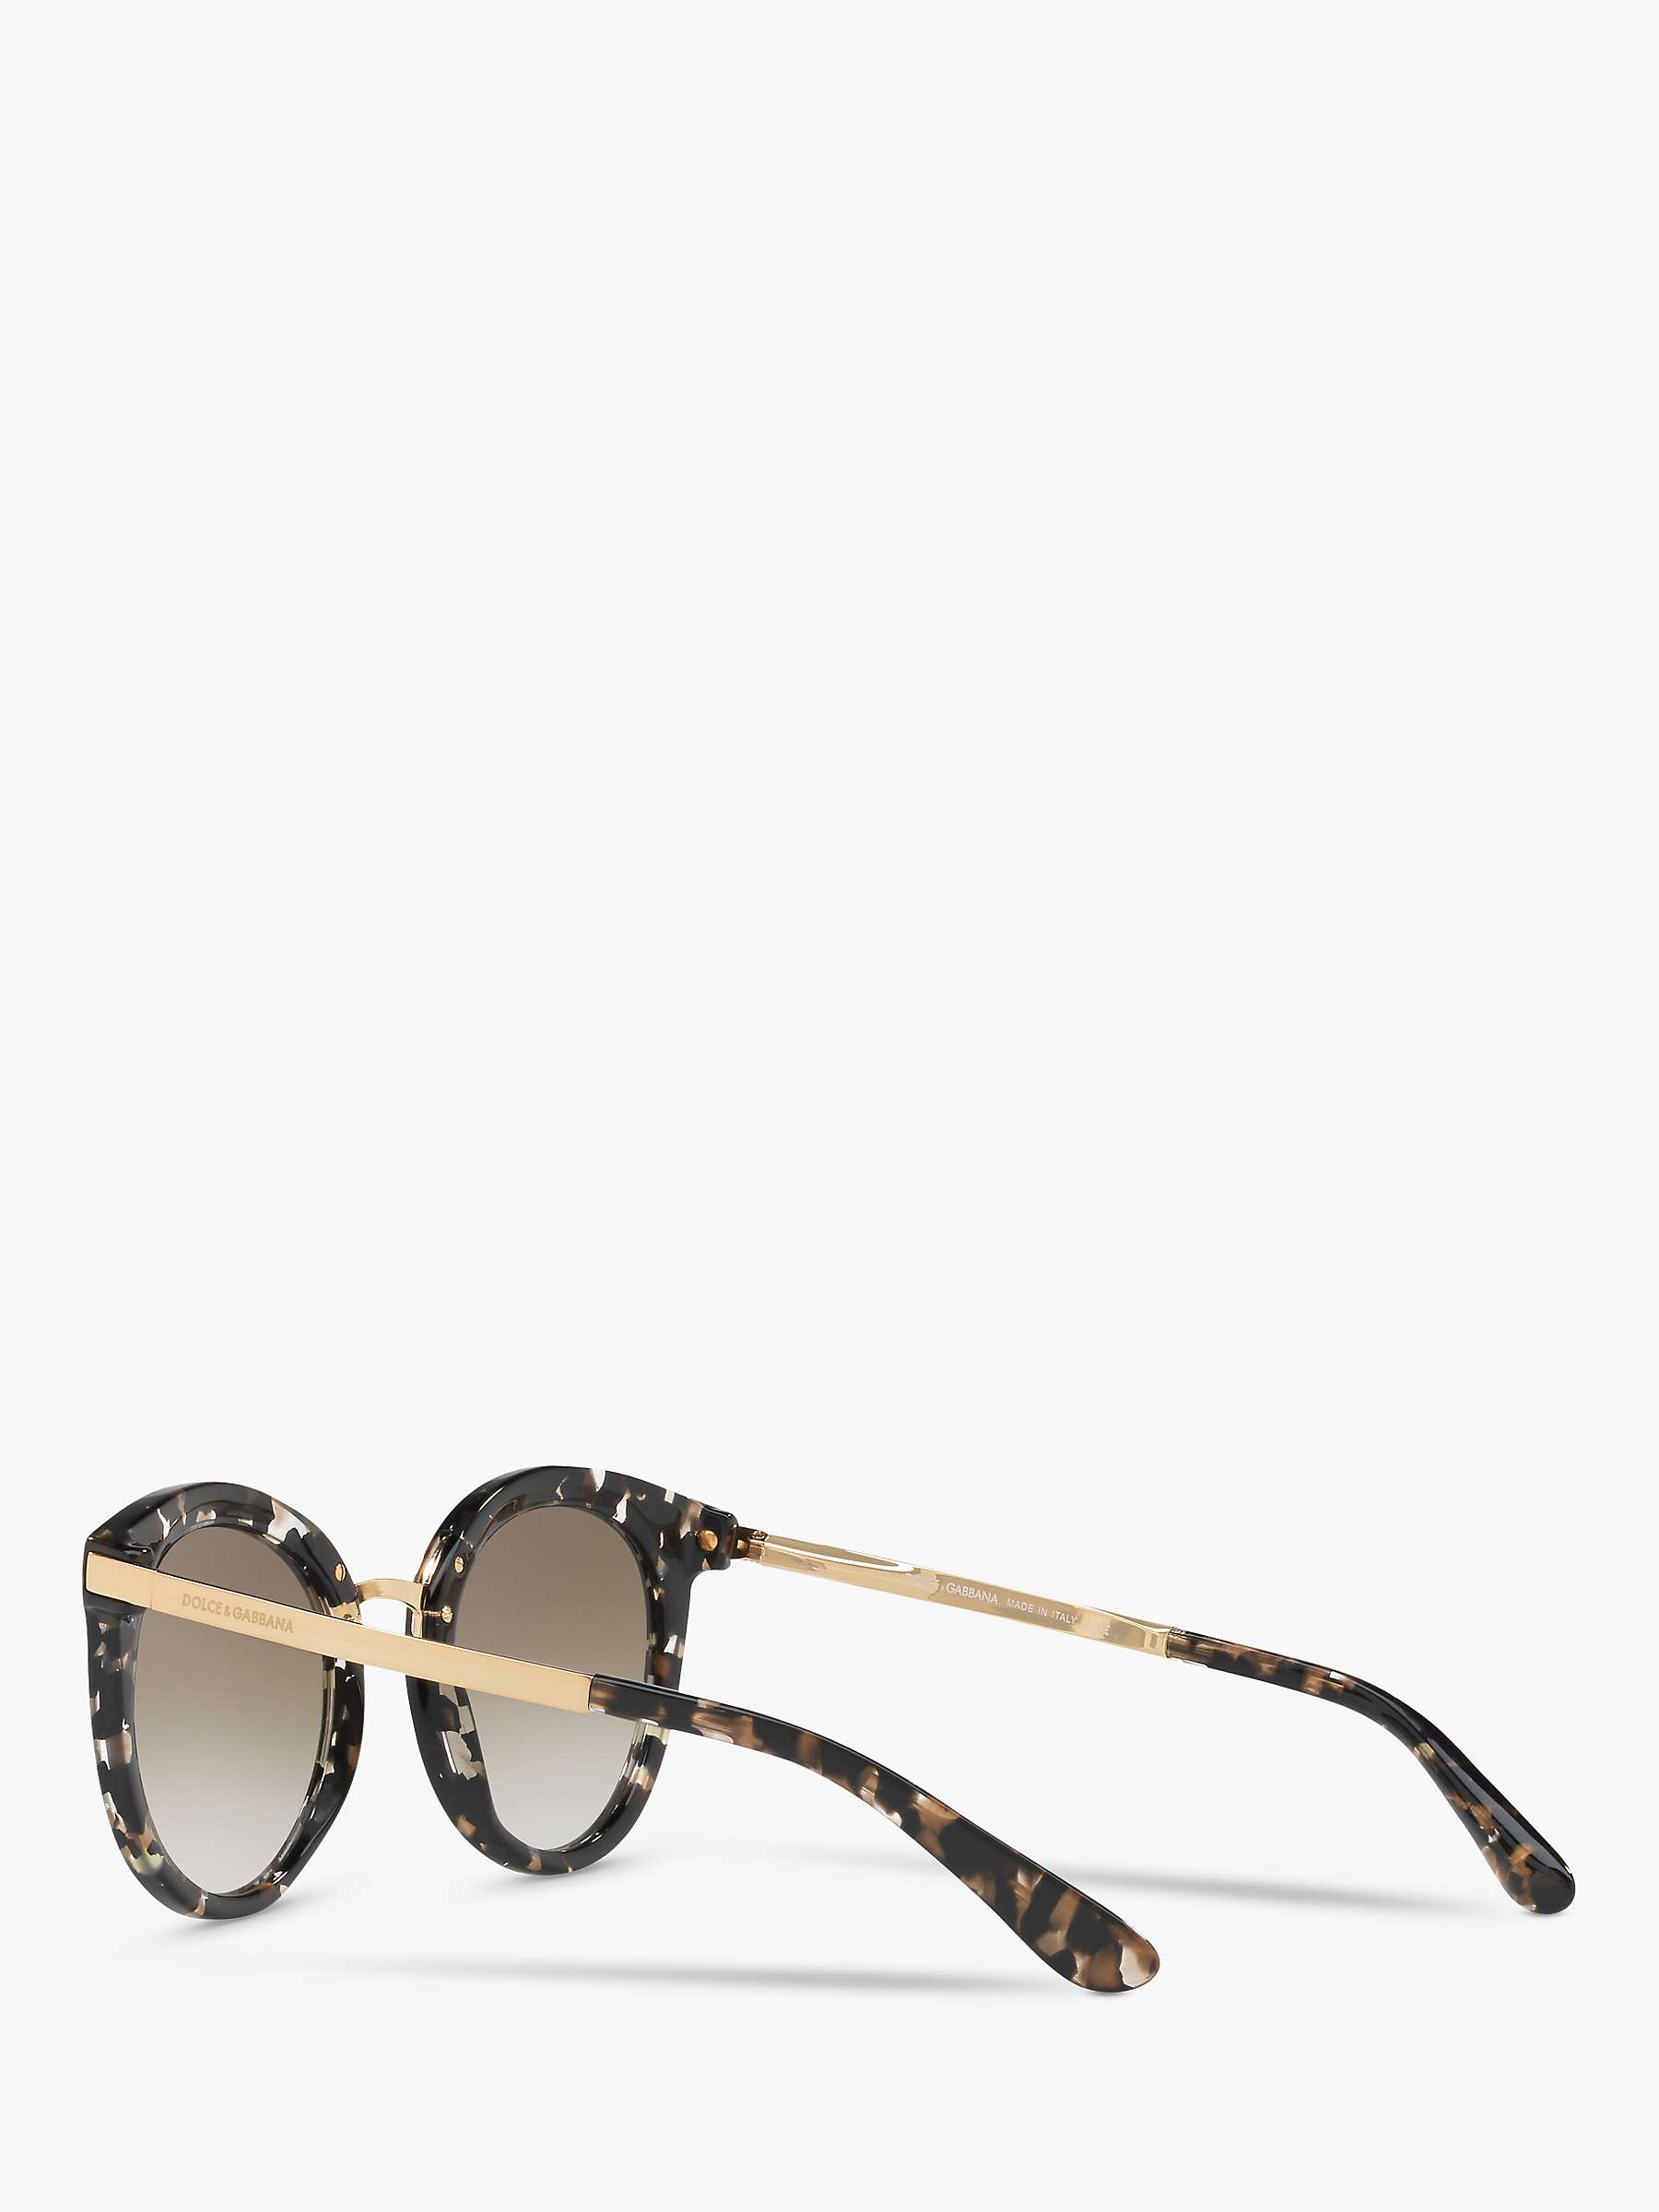 Buy Dolce & Gabbana DG4268 Women's Round Sunglasses Online at johnlewis.com